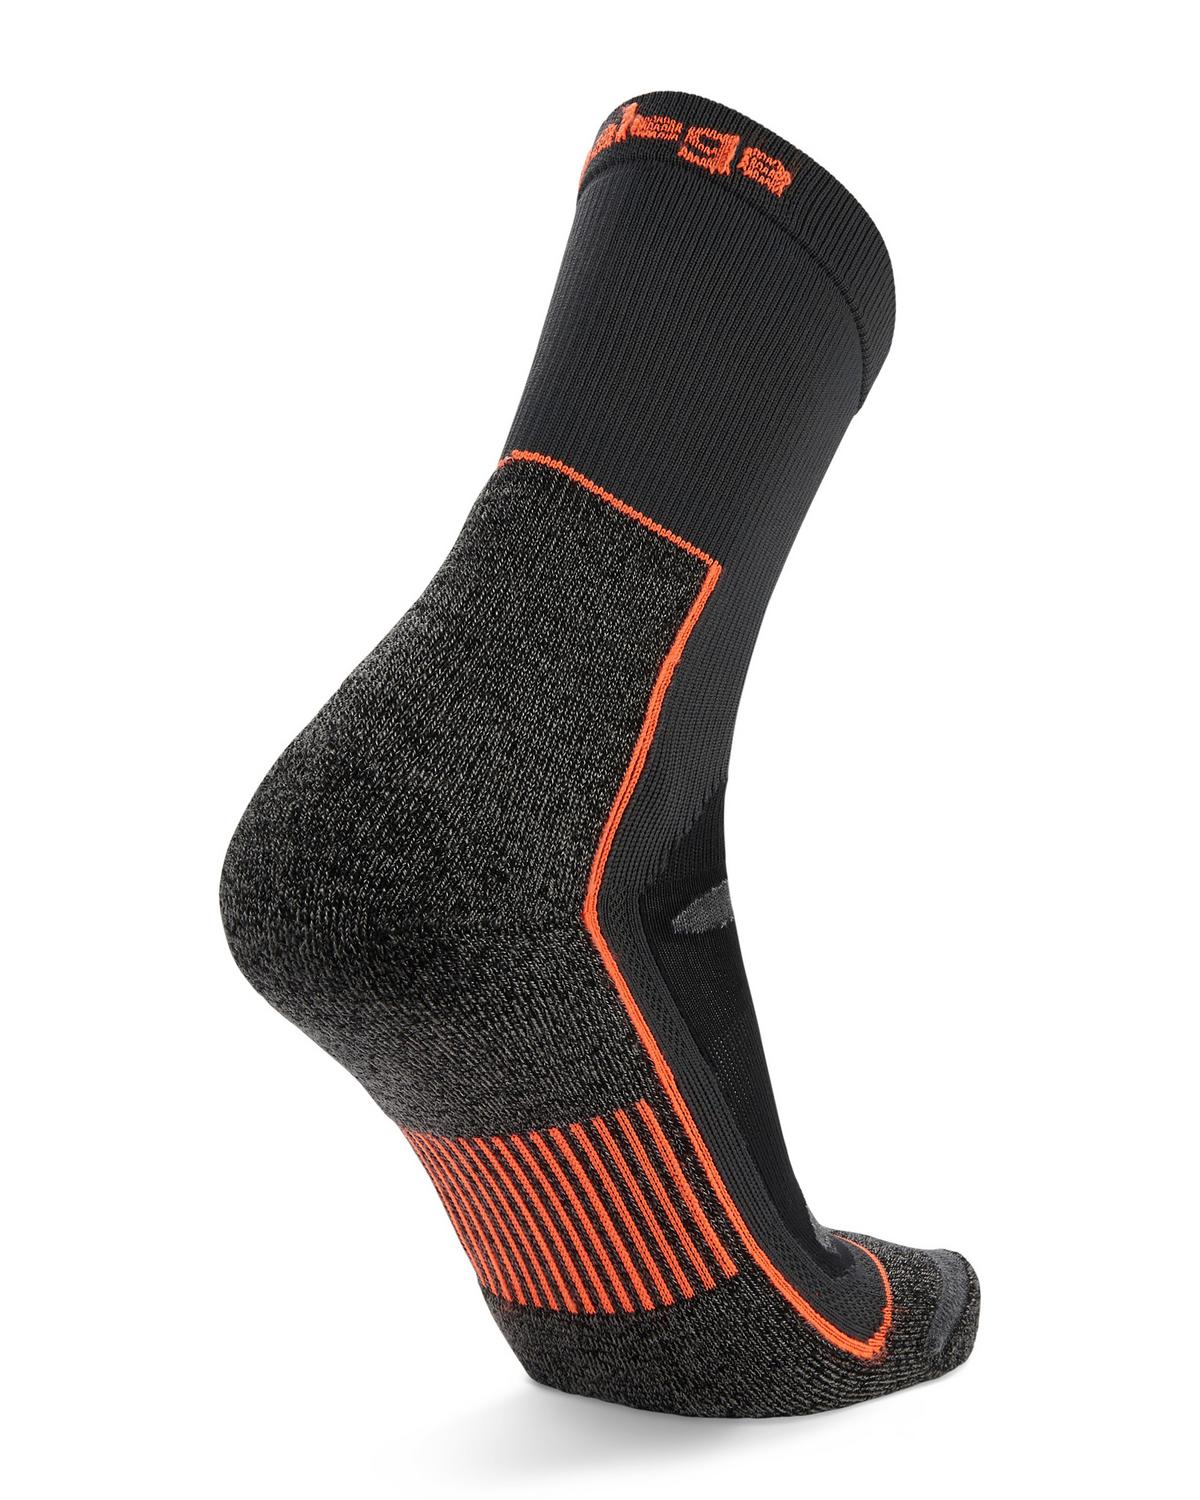 Balega Blister Resist Crew Socks -  Grey/Orange